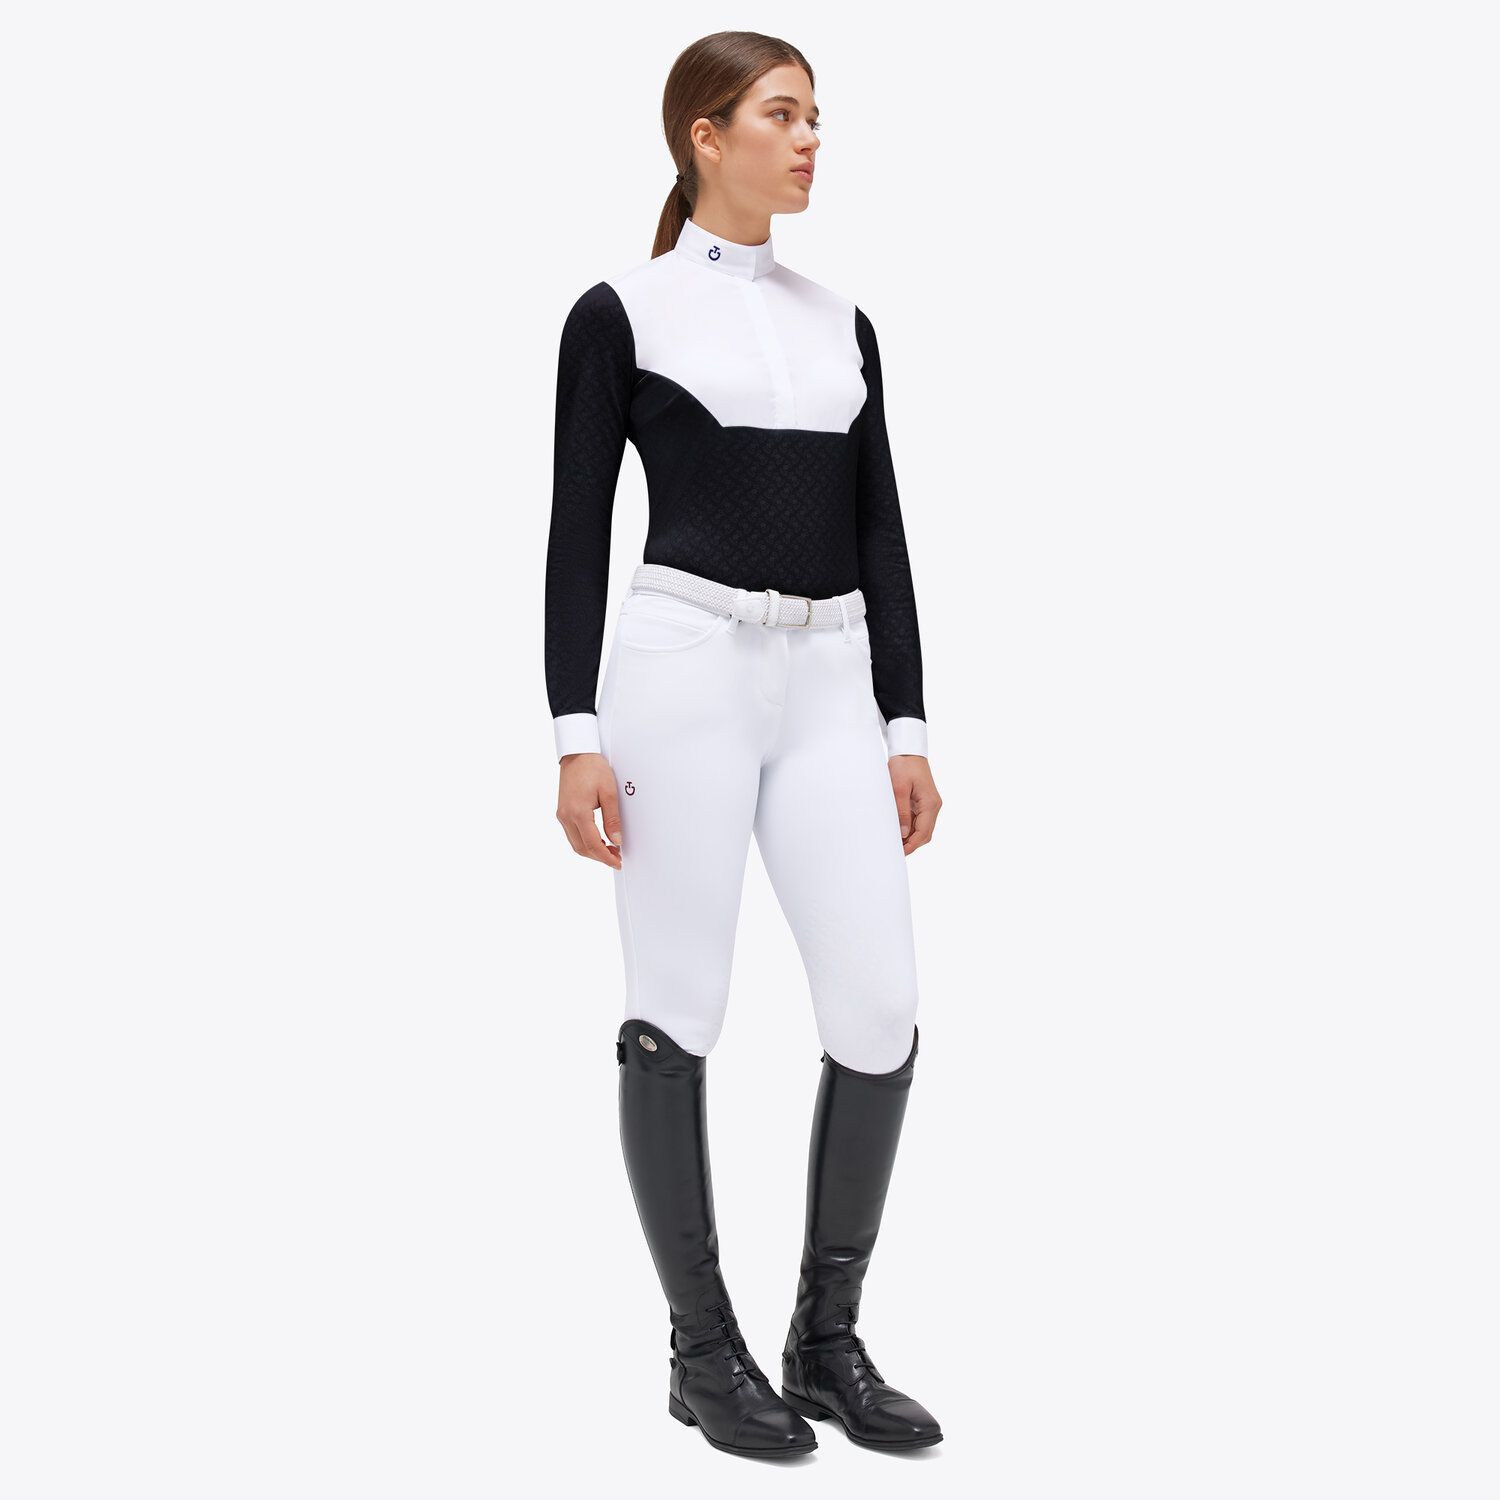 Cavalleria Toscana Women's competition shirt BLACK/WHITE-1